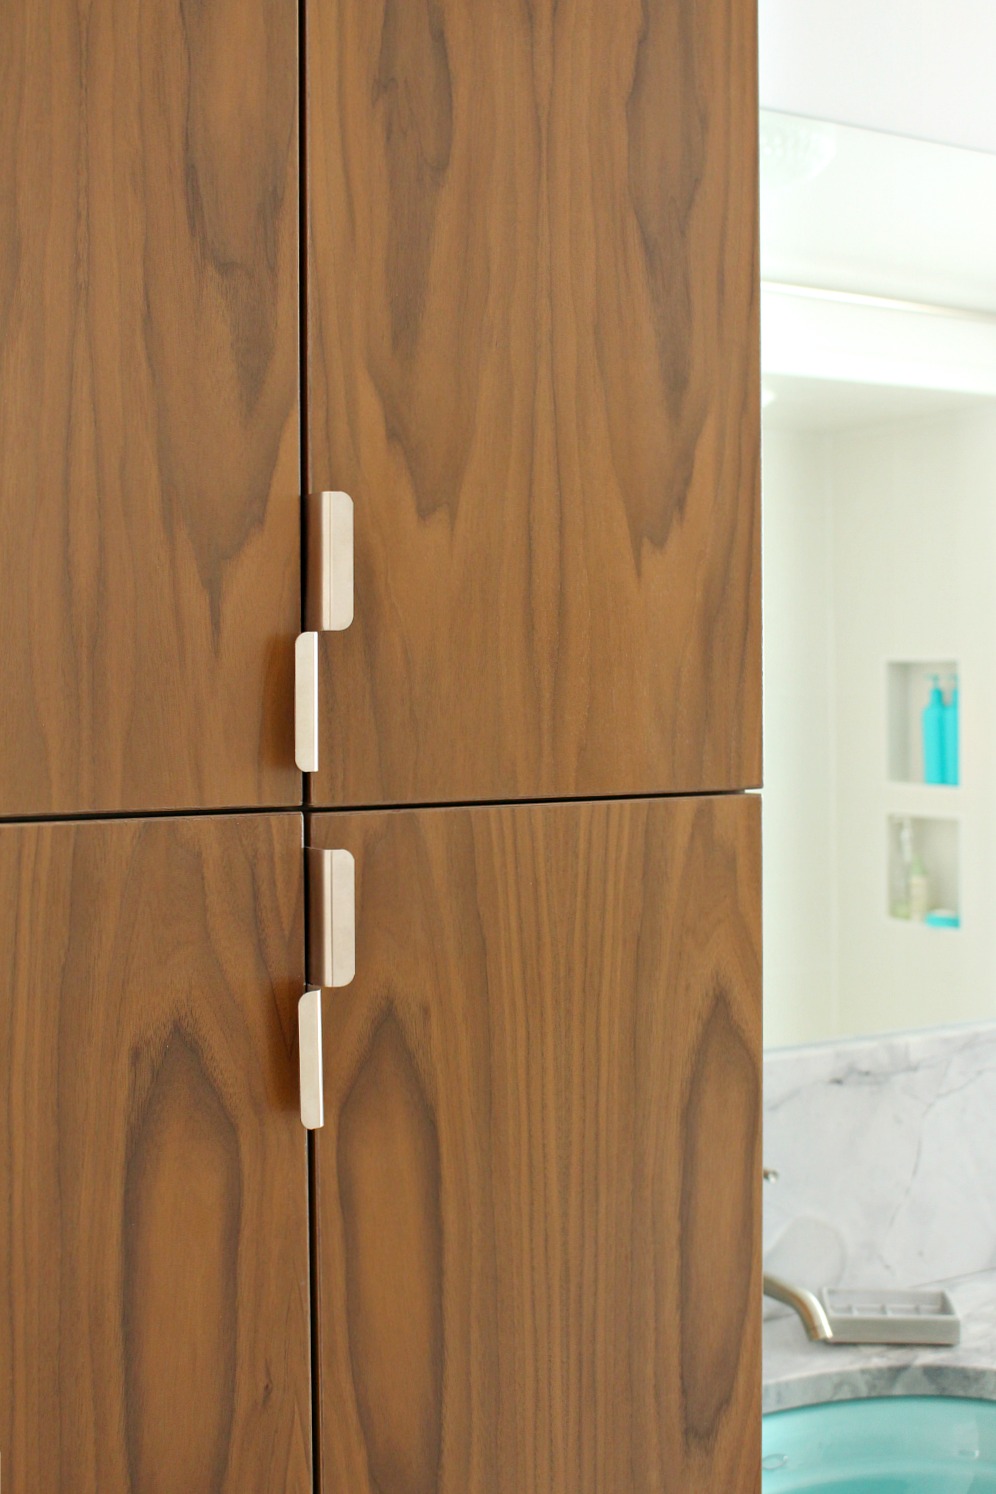 Bathroom Reno Update: Mid-Century Modern Inspired Cabinet Pulls ... - Vertical pulls on tall cabinet doors